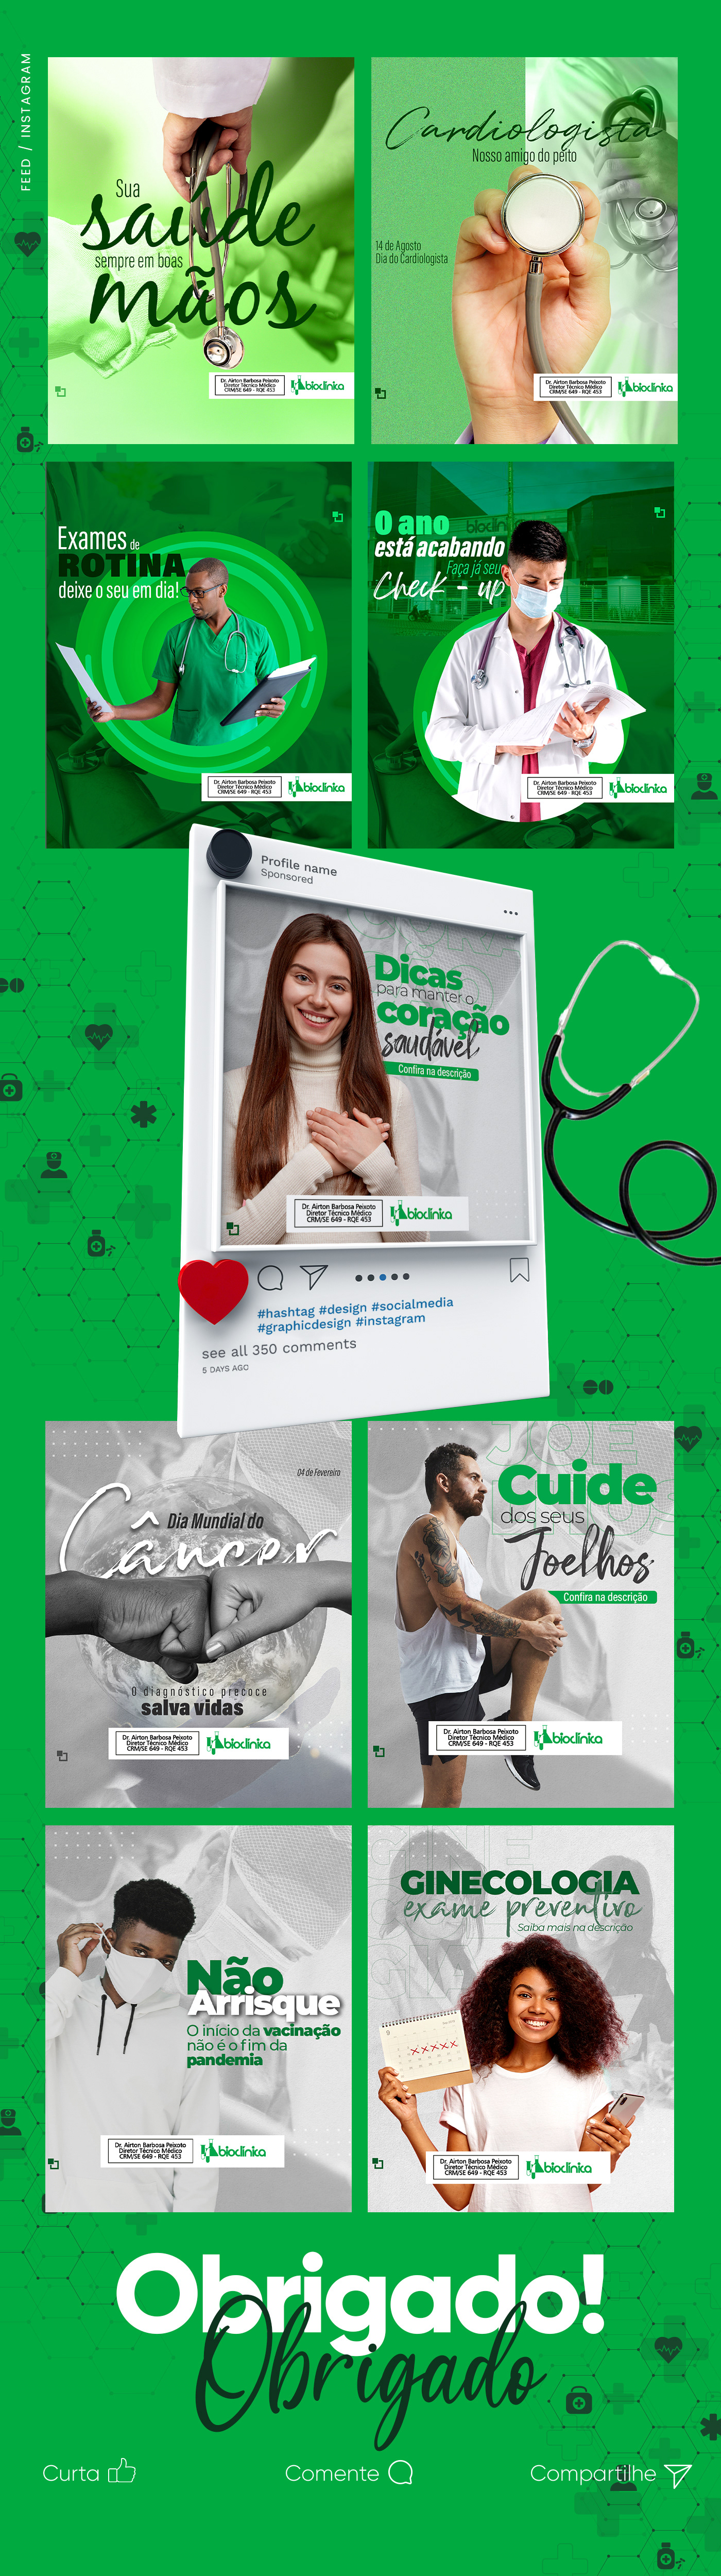 clinica facebook instagram marketing digital medicina photoshop rede social saúde sergipe social media